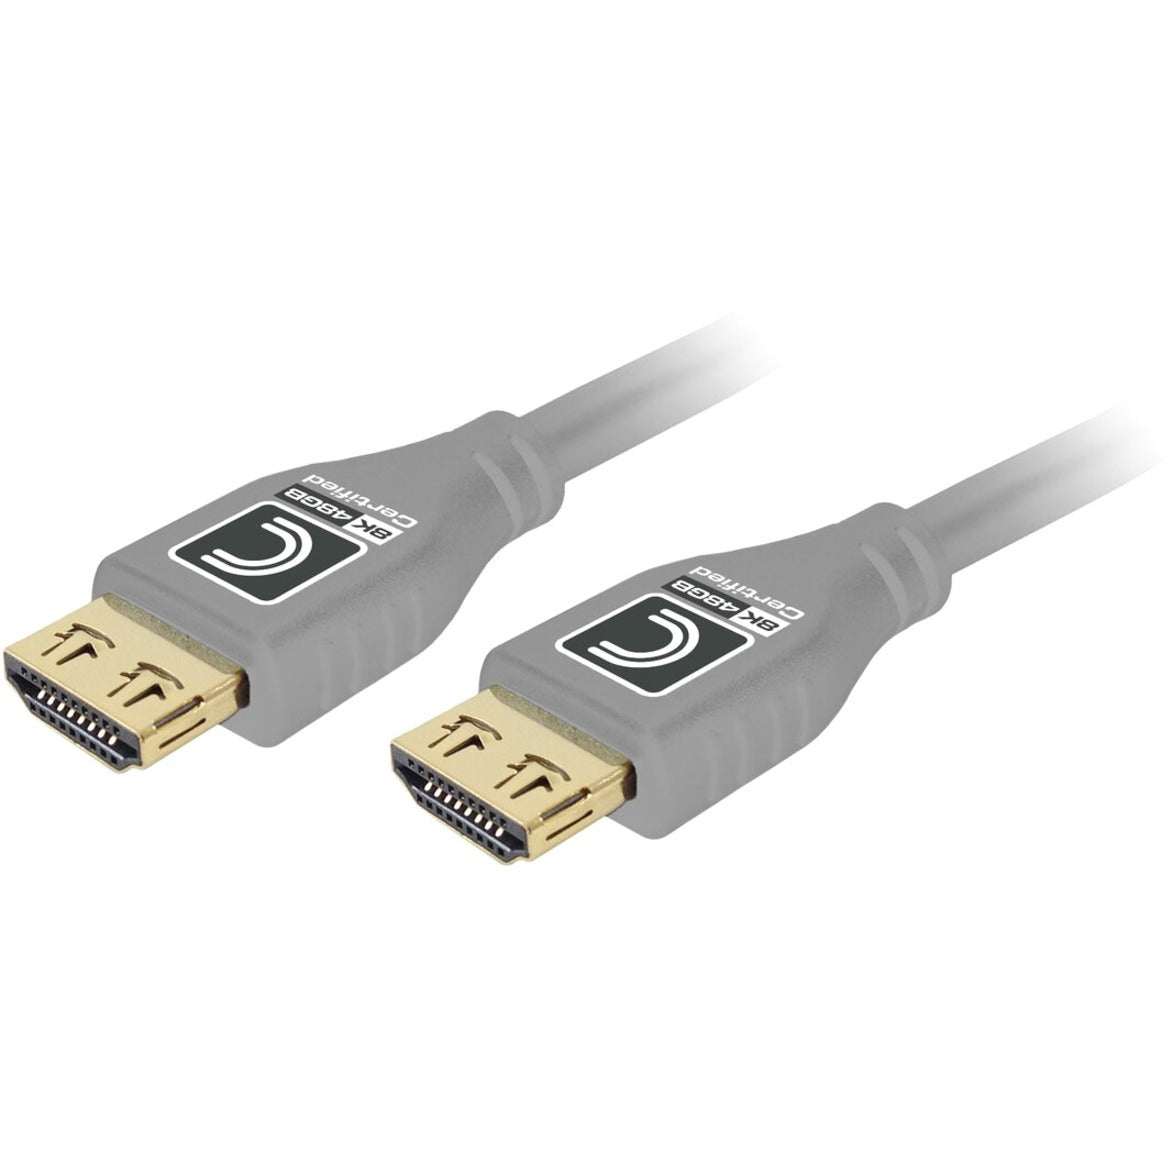 Comprehensive MHD48G-3PROGRY MicroFlex Pro AV/IT HDMI A/V Cable, 3 ft, 48 Gbit/s, Gray, Lifetime Warranty